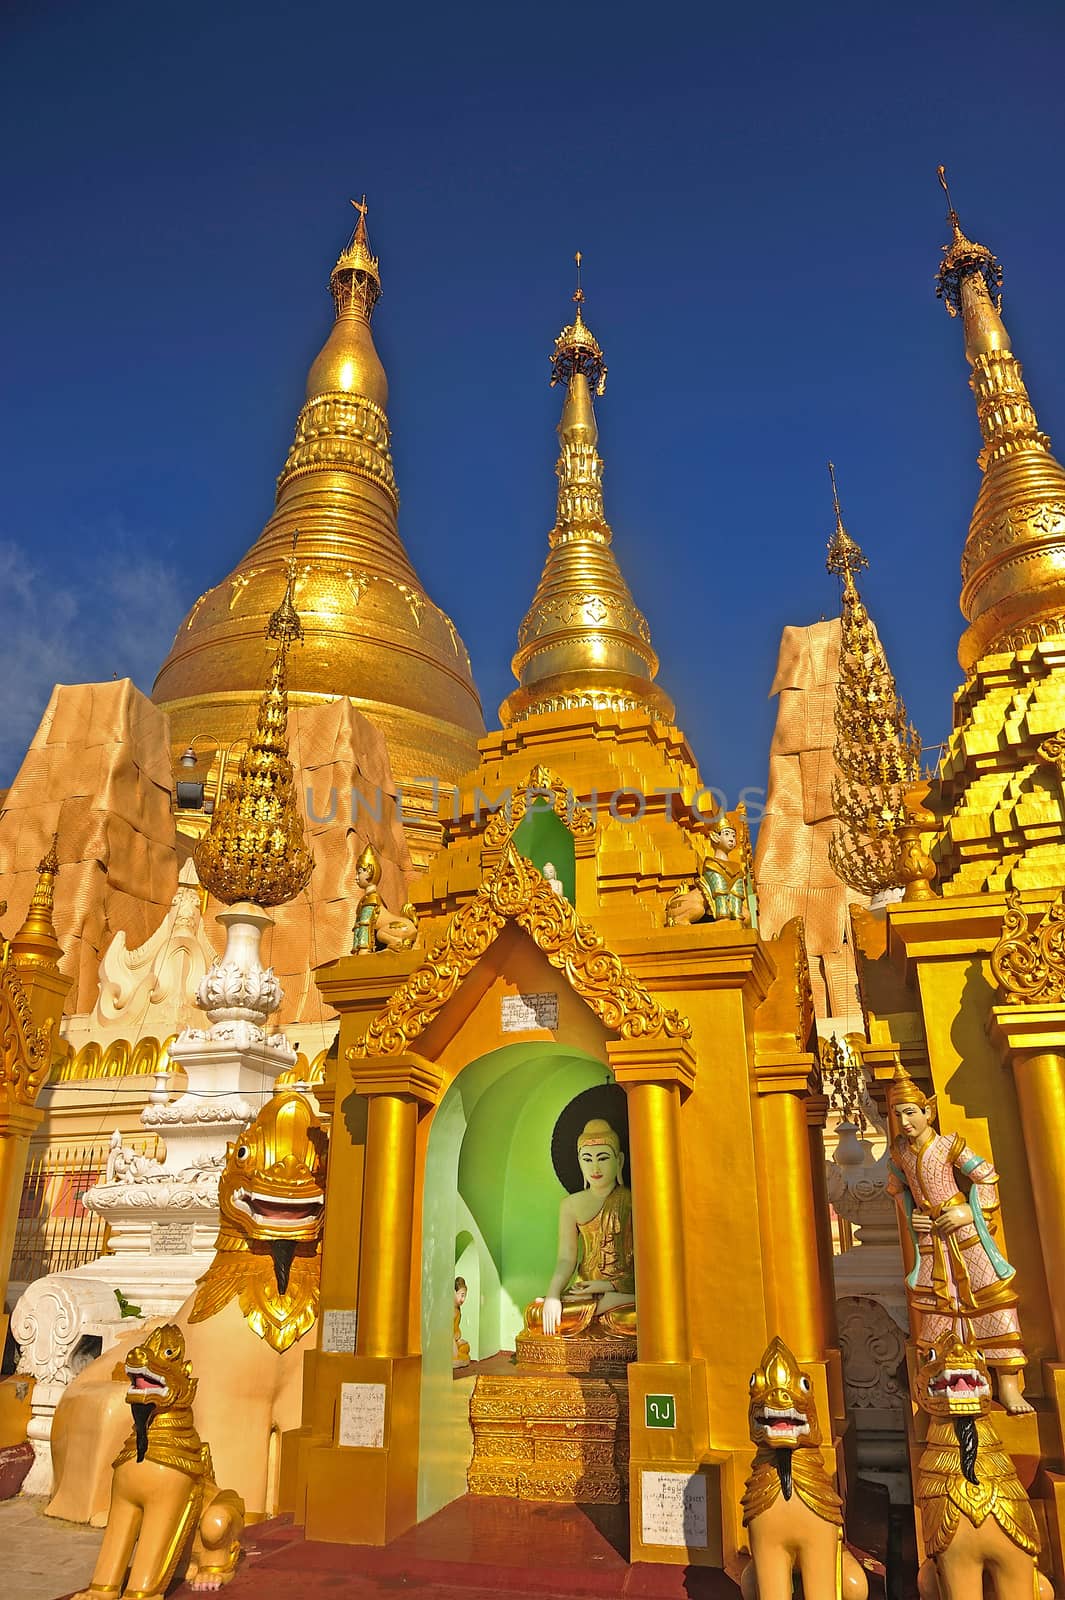 Details of the Shwedagon Paya, in Yangon, Myanmar (or Burma)